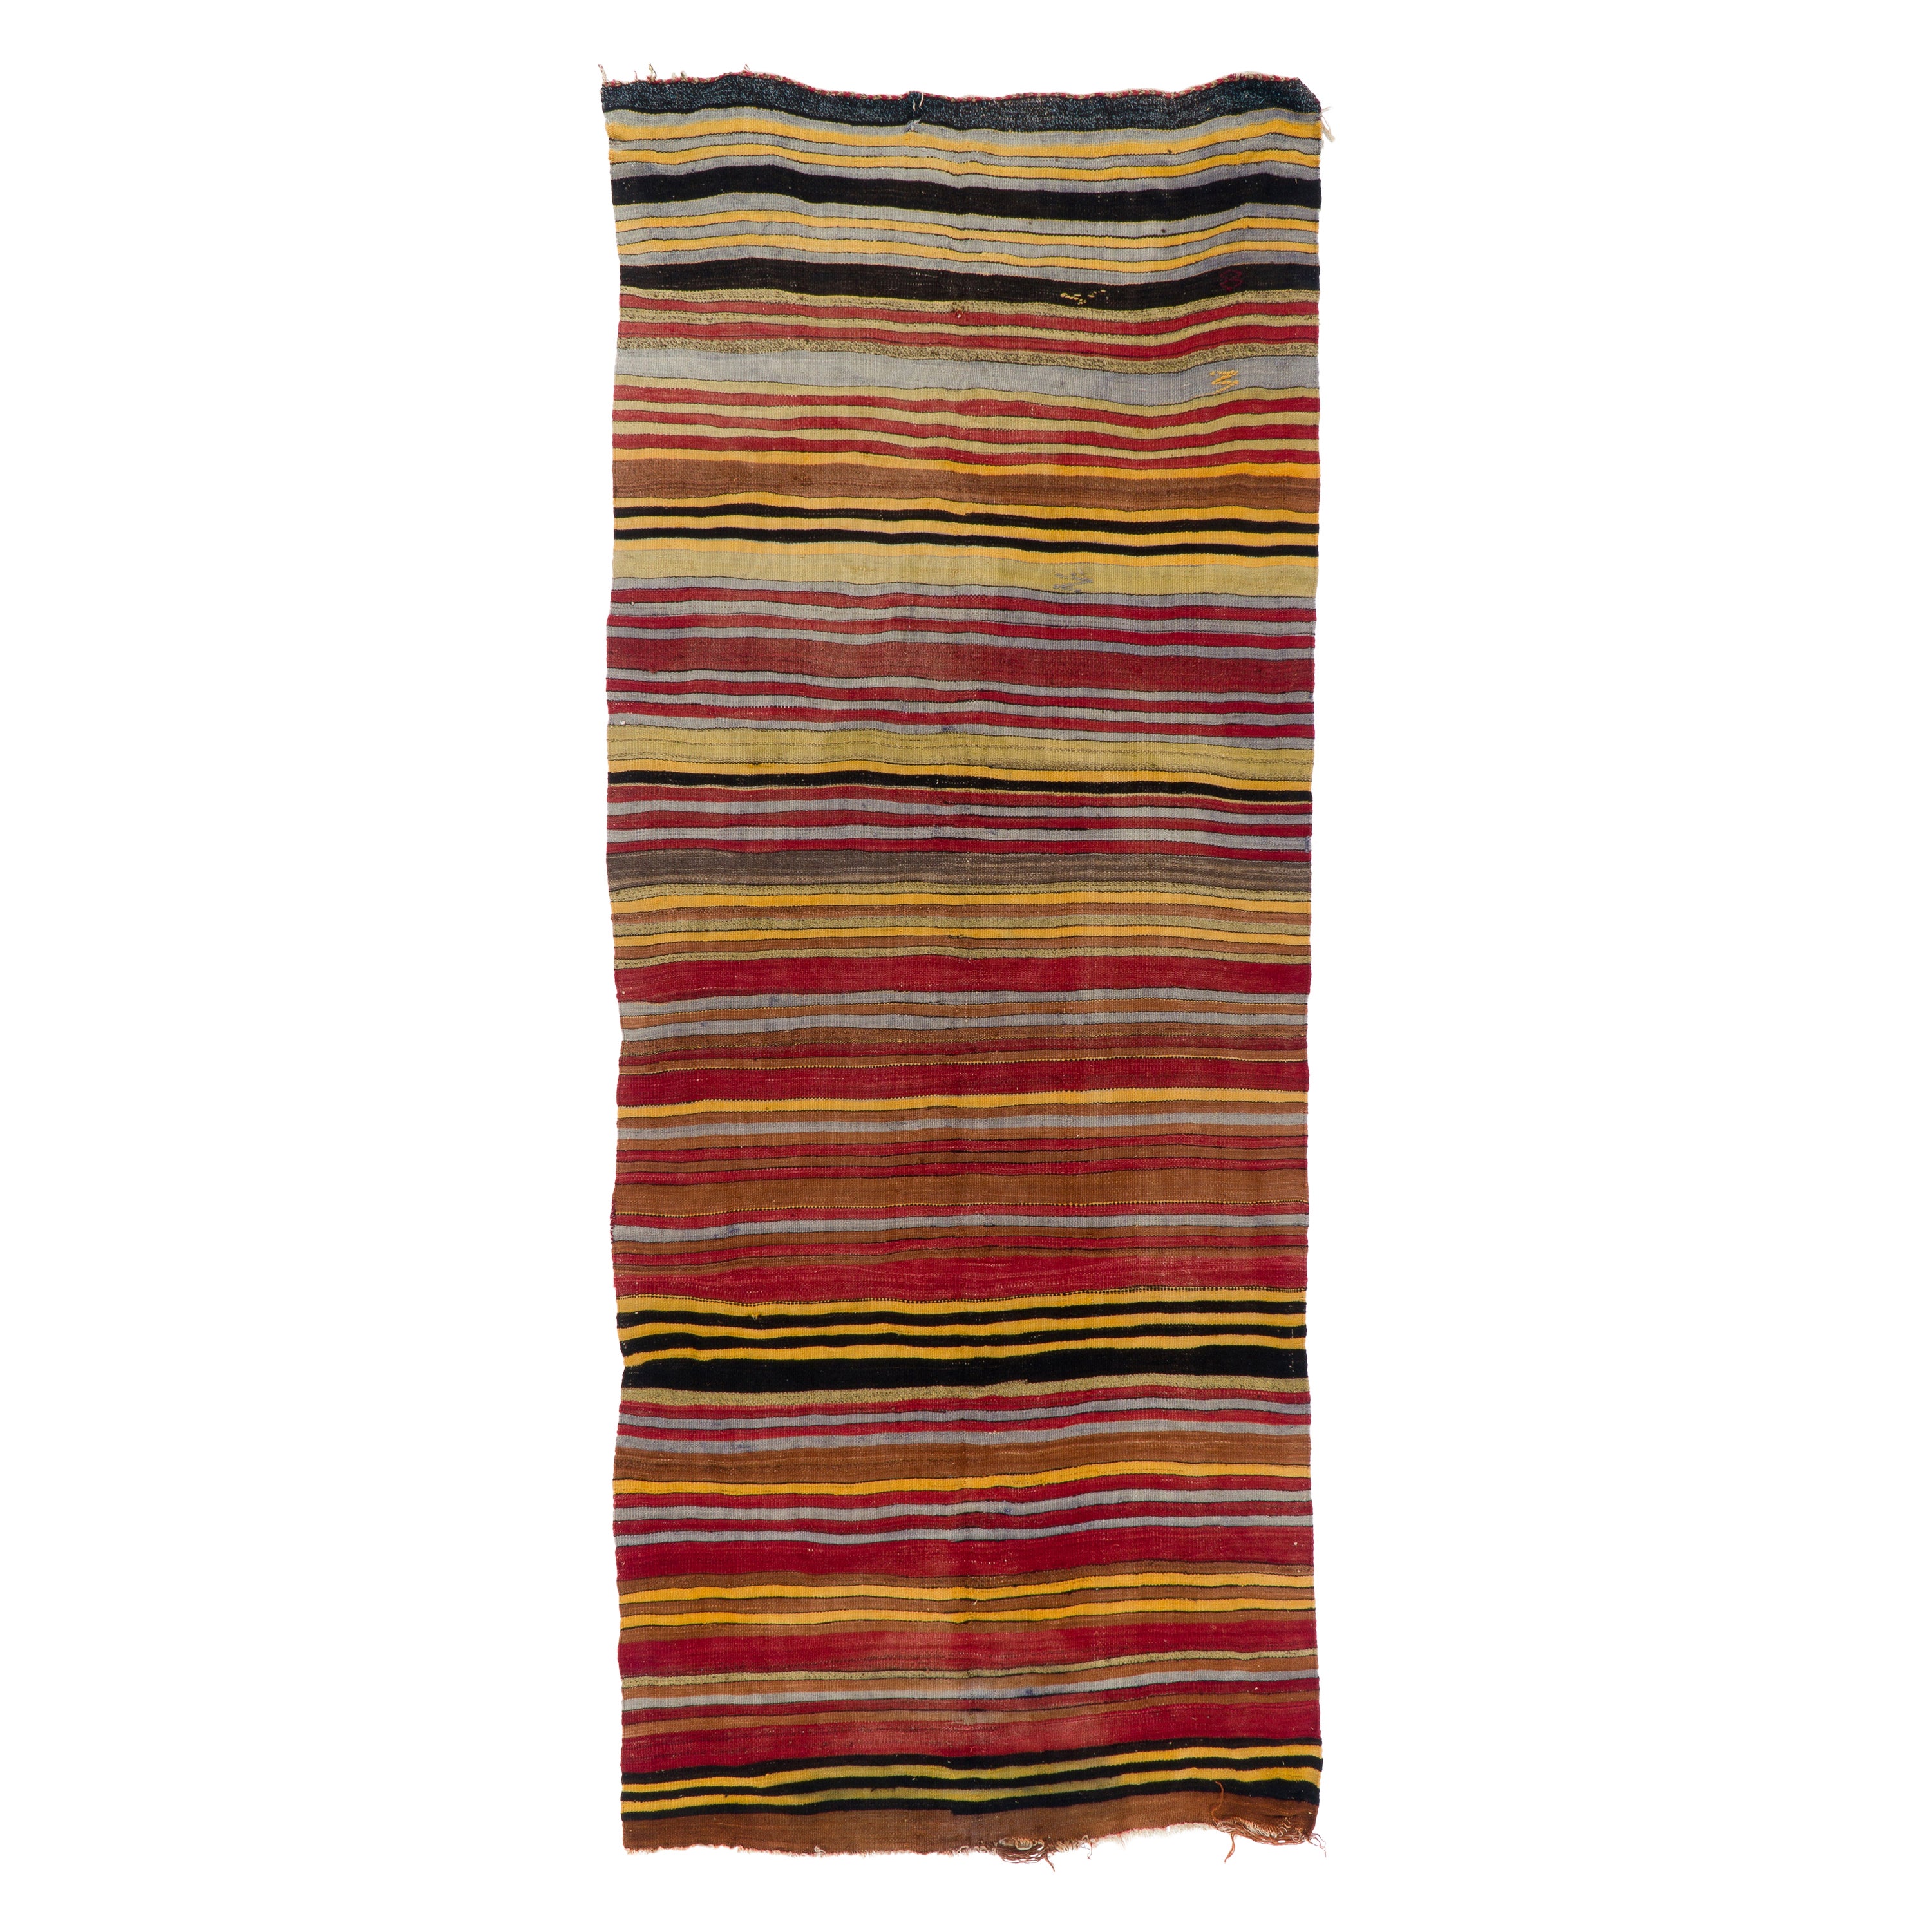 4.6x11.2 Ft Colorful Vintage Striped Handwoven Turkish Kilim 'Flat Weave'